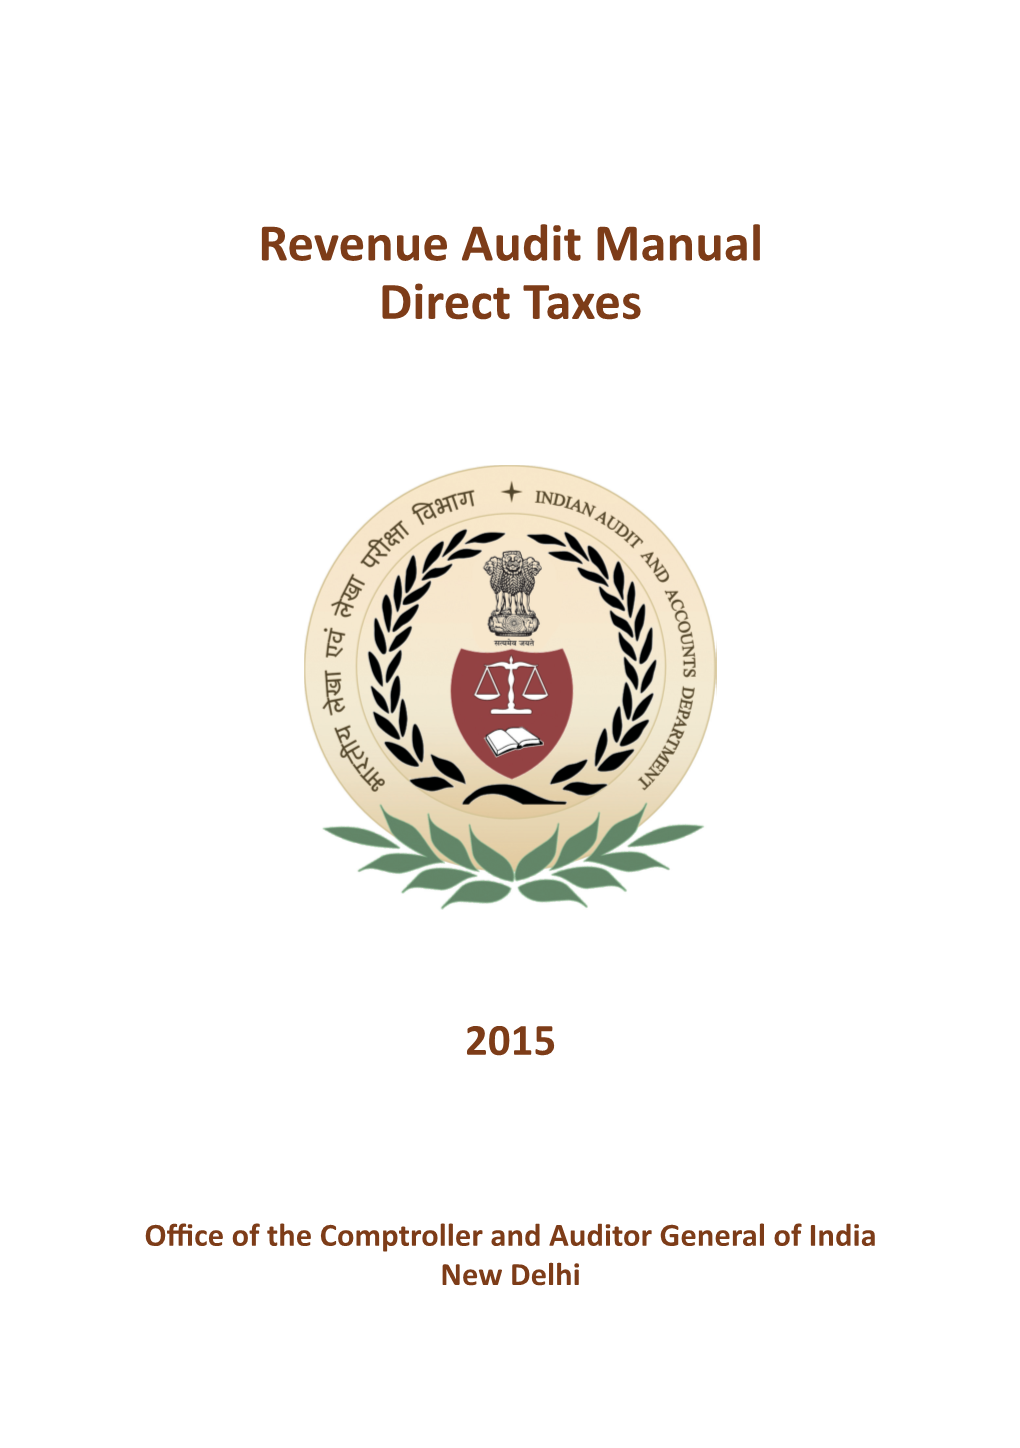 Revenue Audit Manual Direct Taxes